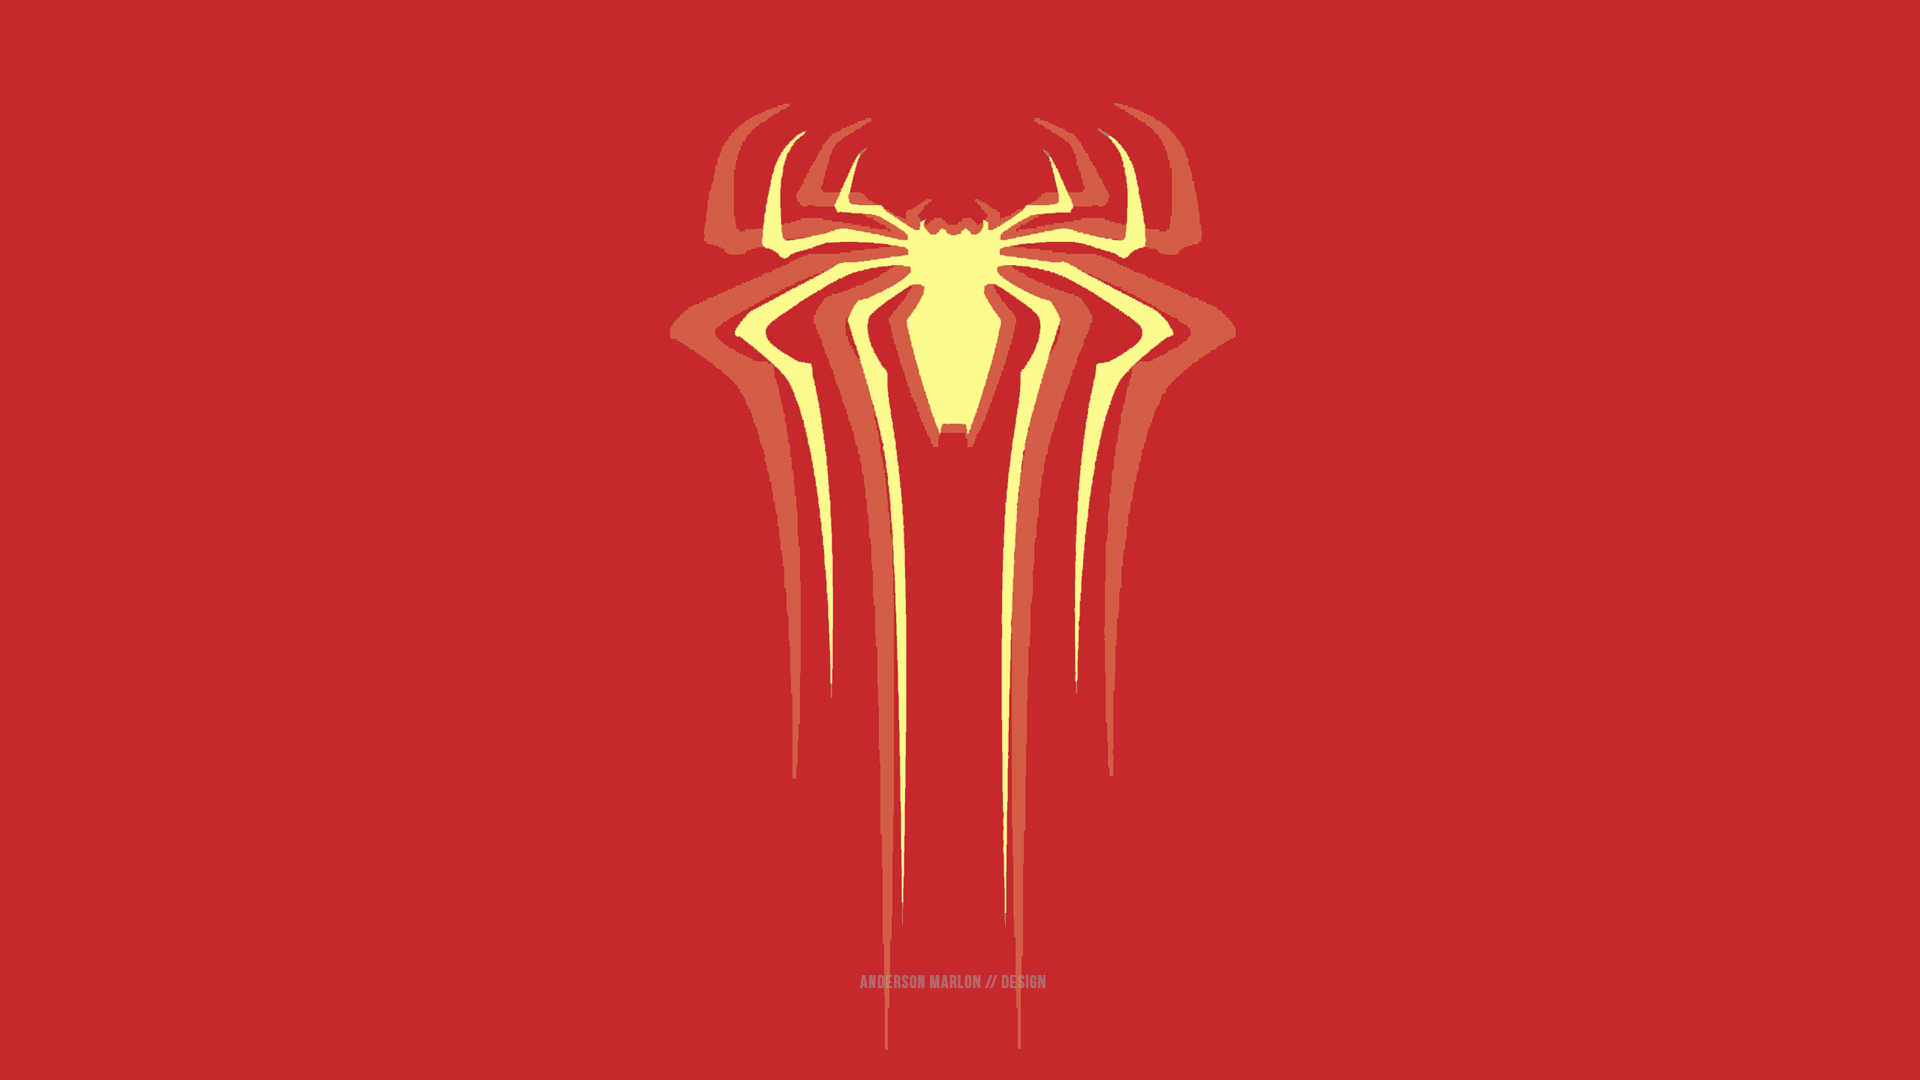 General 1920x1080 Iron Spider Armor Iron Man red background simple background superhero